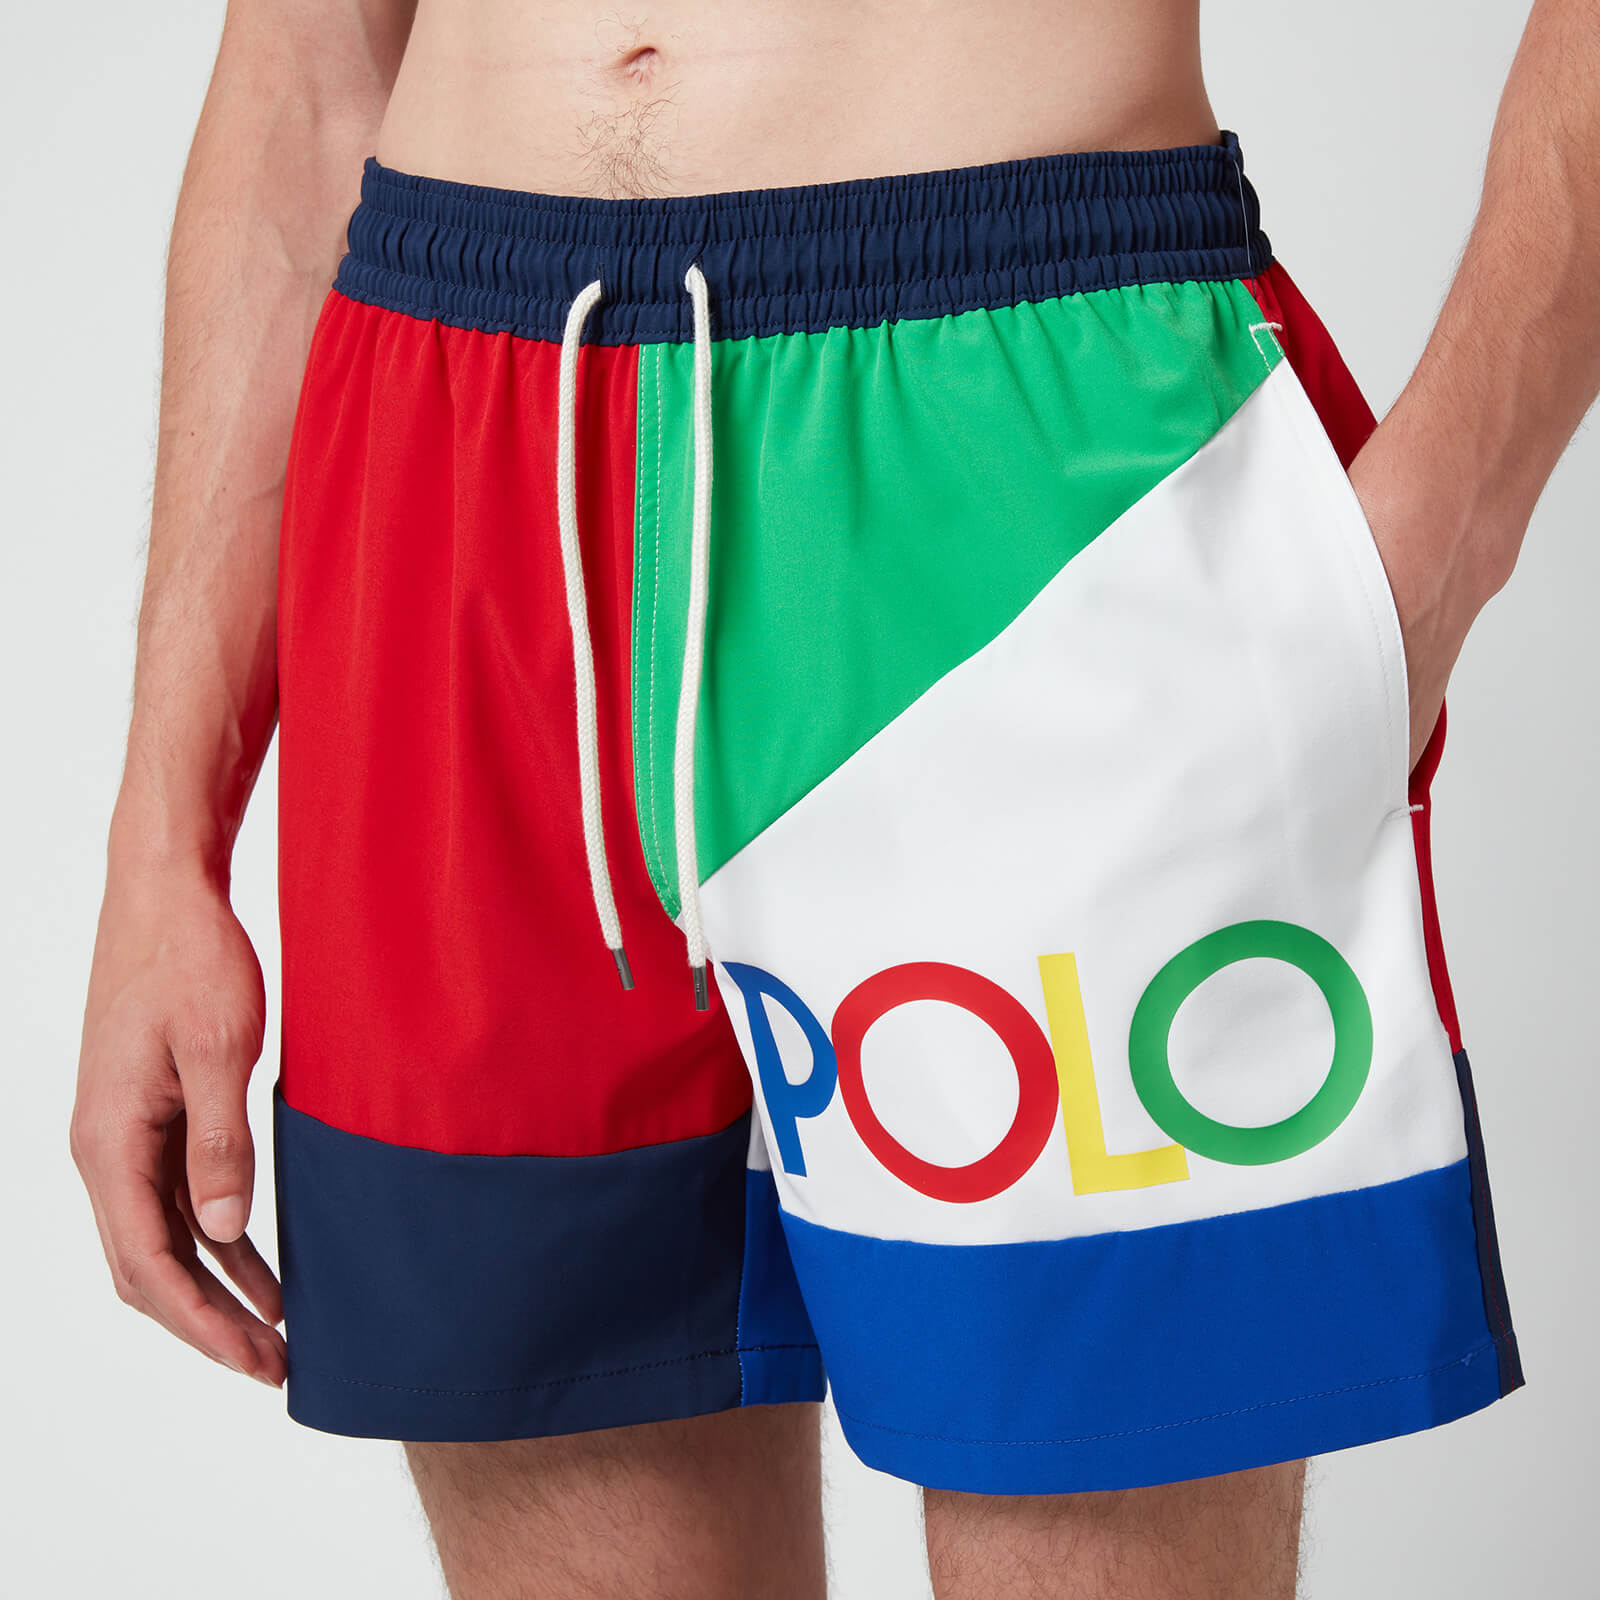 Polo Ralph Lauren Men's Traveller Swimming Trunks - Royal Multi - Xl 710845258001 Swimwear And Beachwear Clothing Accessories, Multi